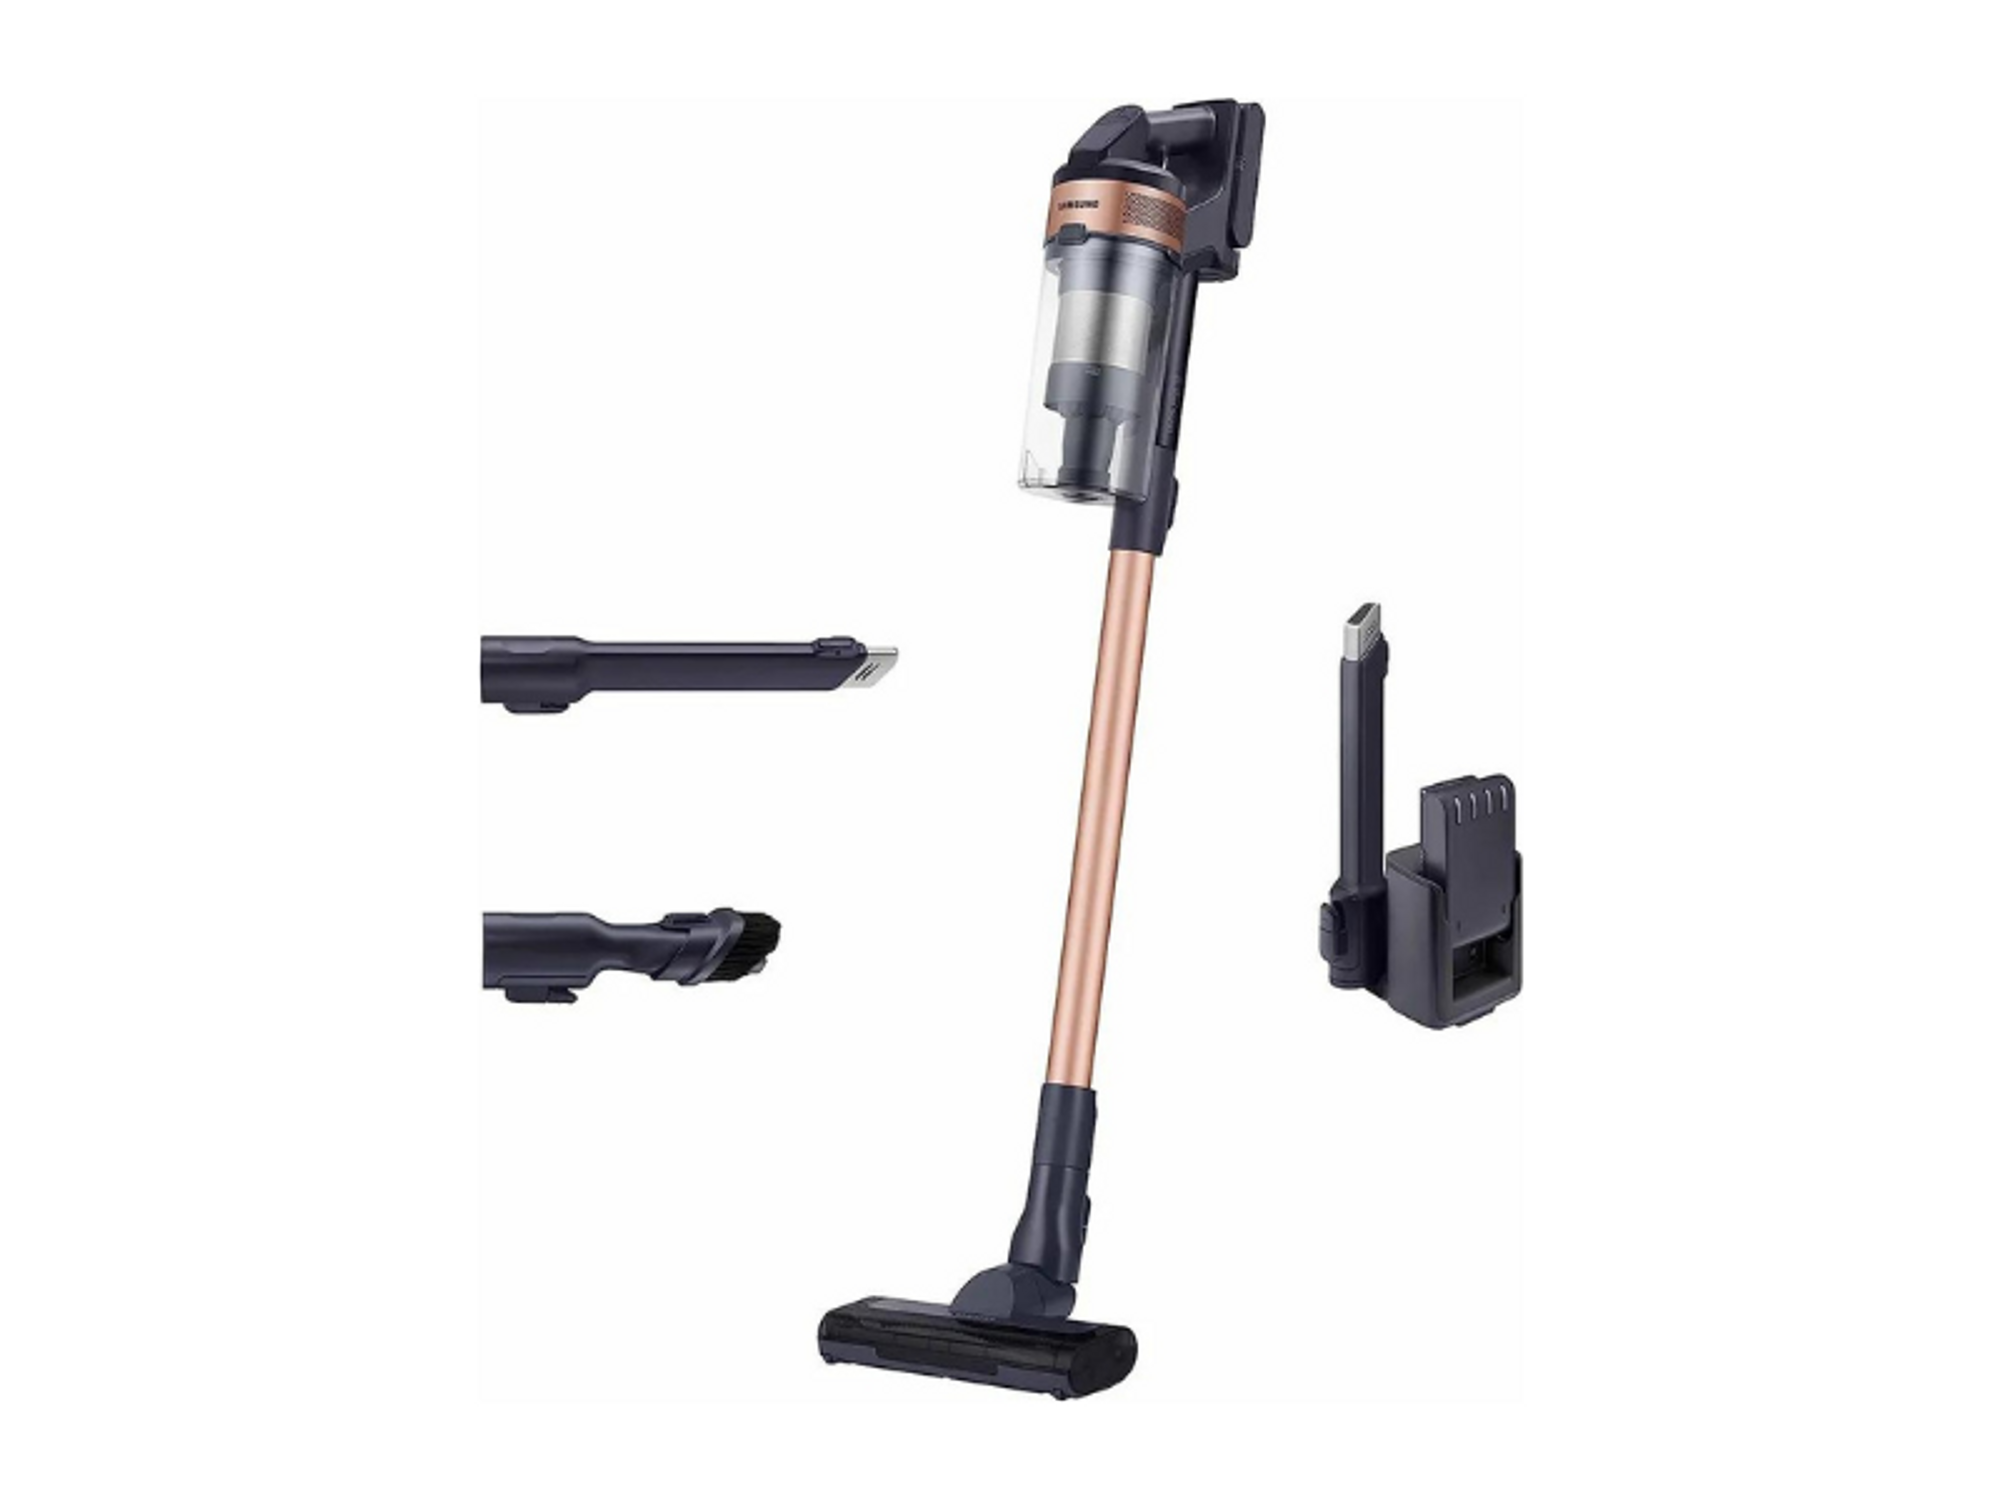 samsung jet 60 flex cordless stick vacuum cleaner